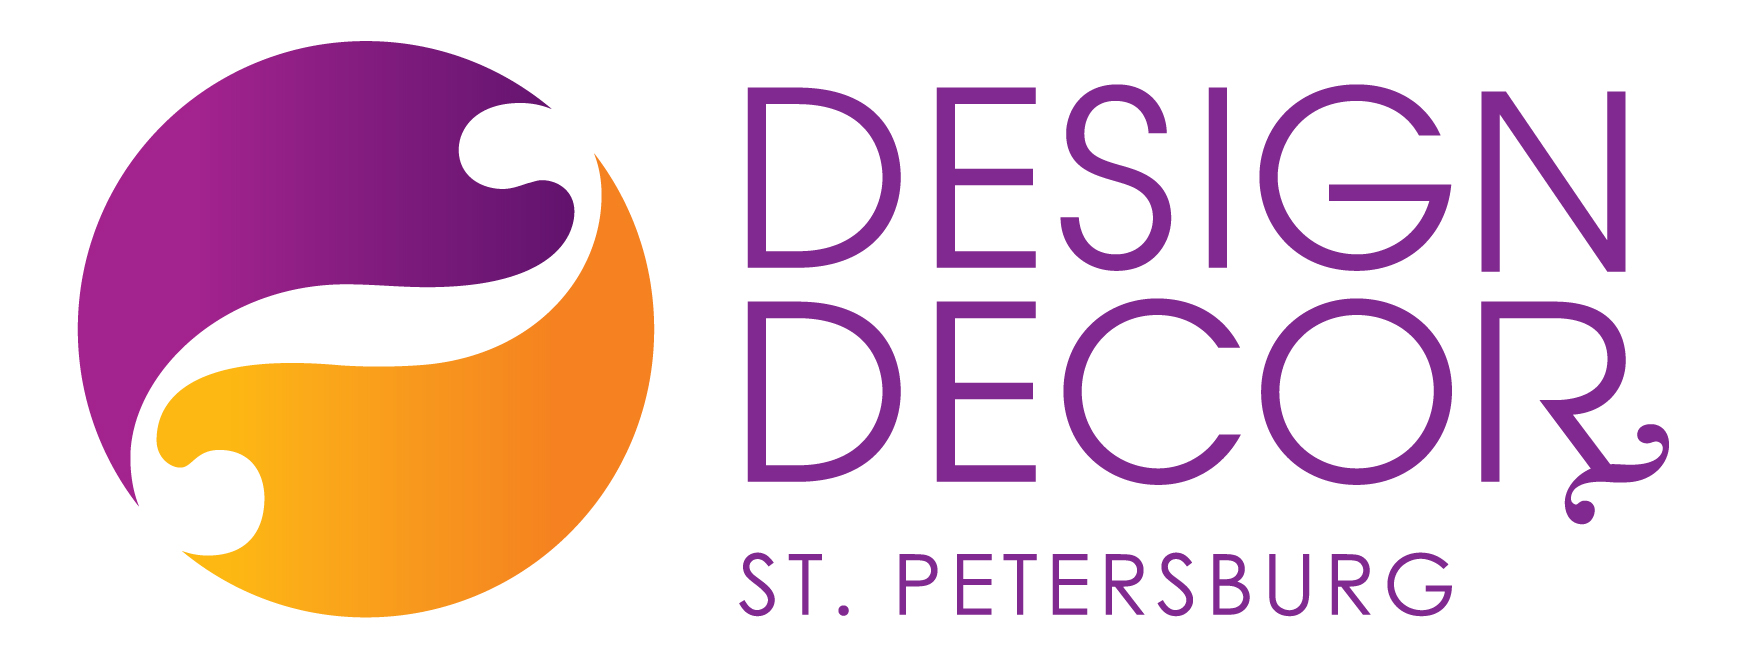 Design&Decor St. Petersburg 2014